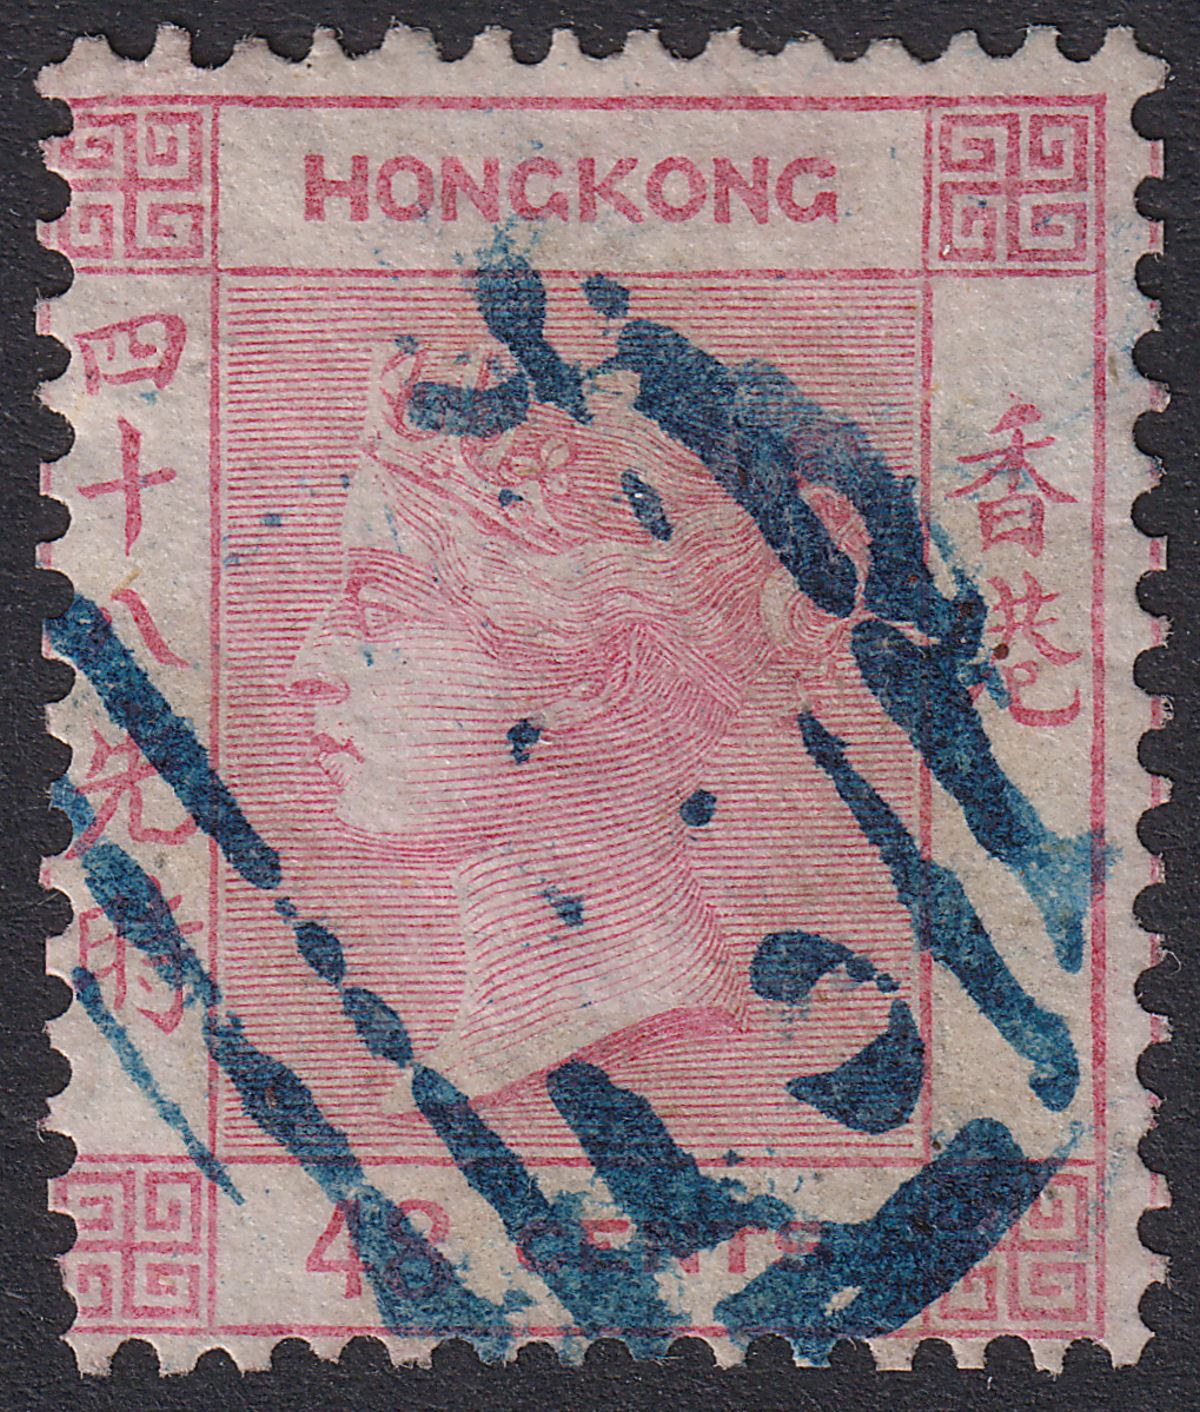 Hong Kong 1862 QV 48c Rose Used SG6 cat £350 with deep blue B62 postmark